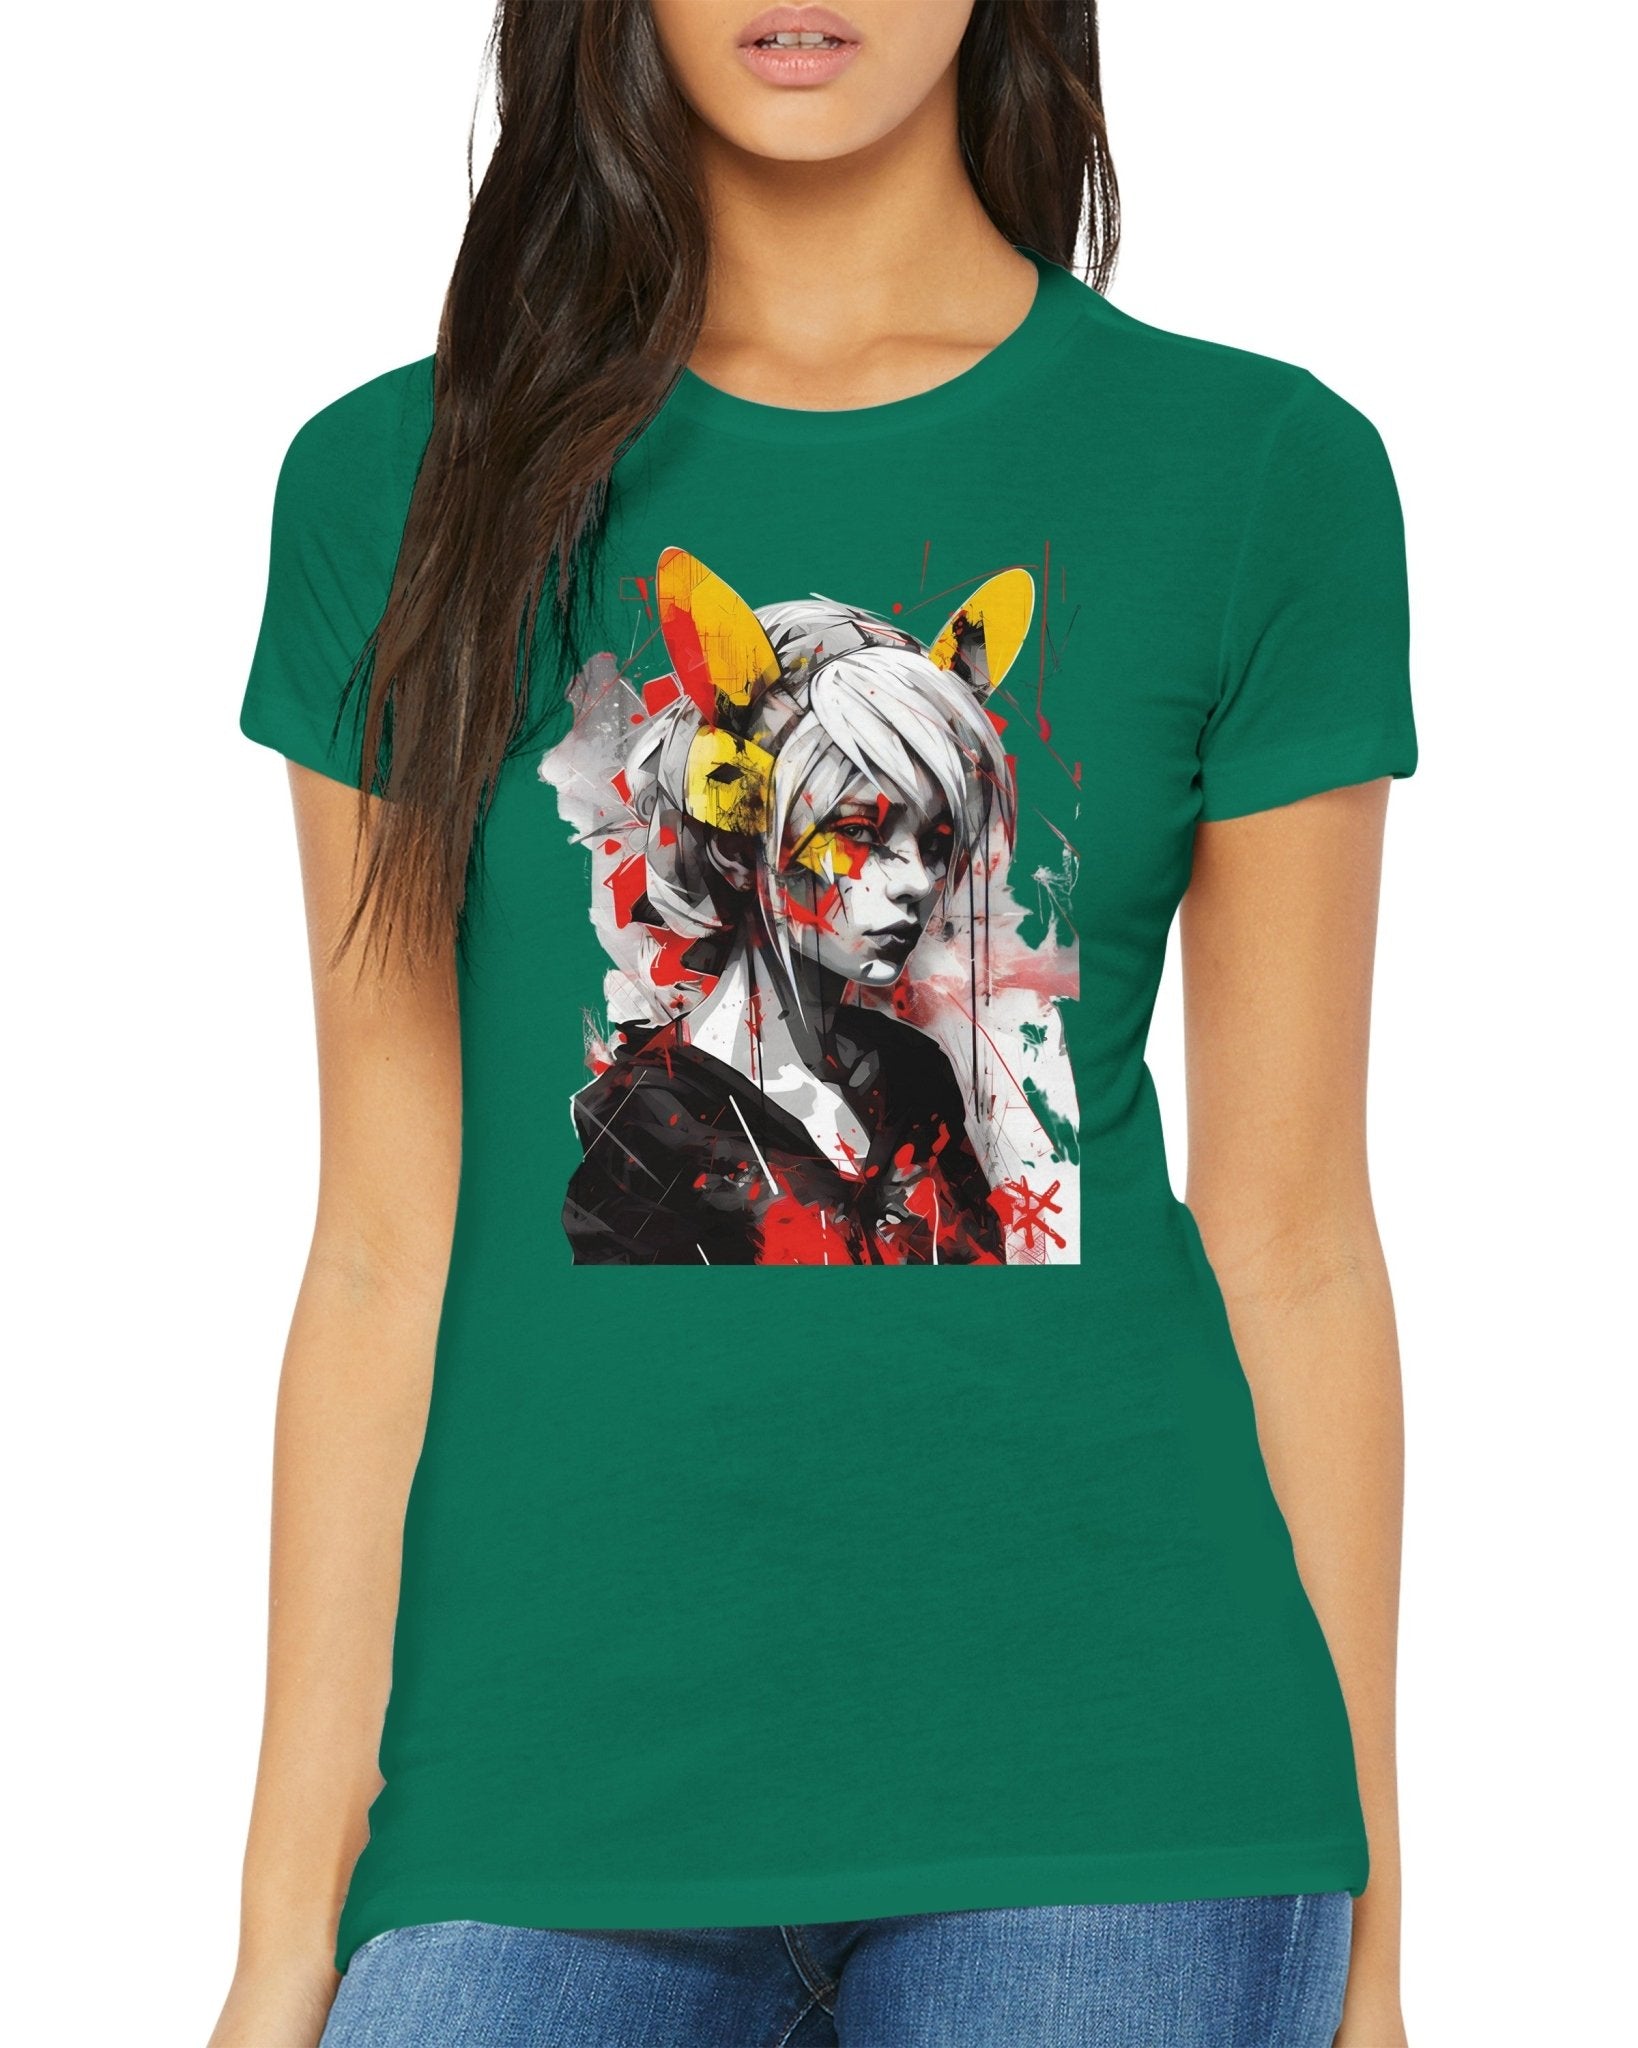 GIRL WITH CAT EARS Premium Tee - Rarileto t shirts